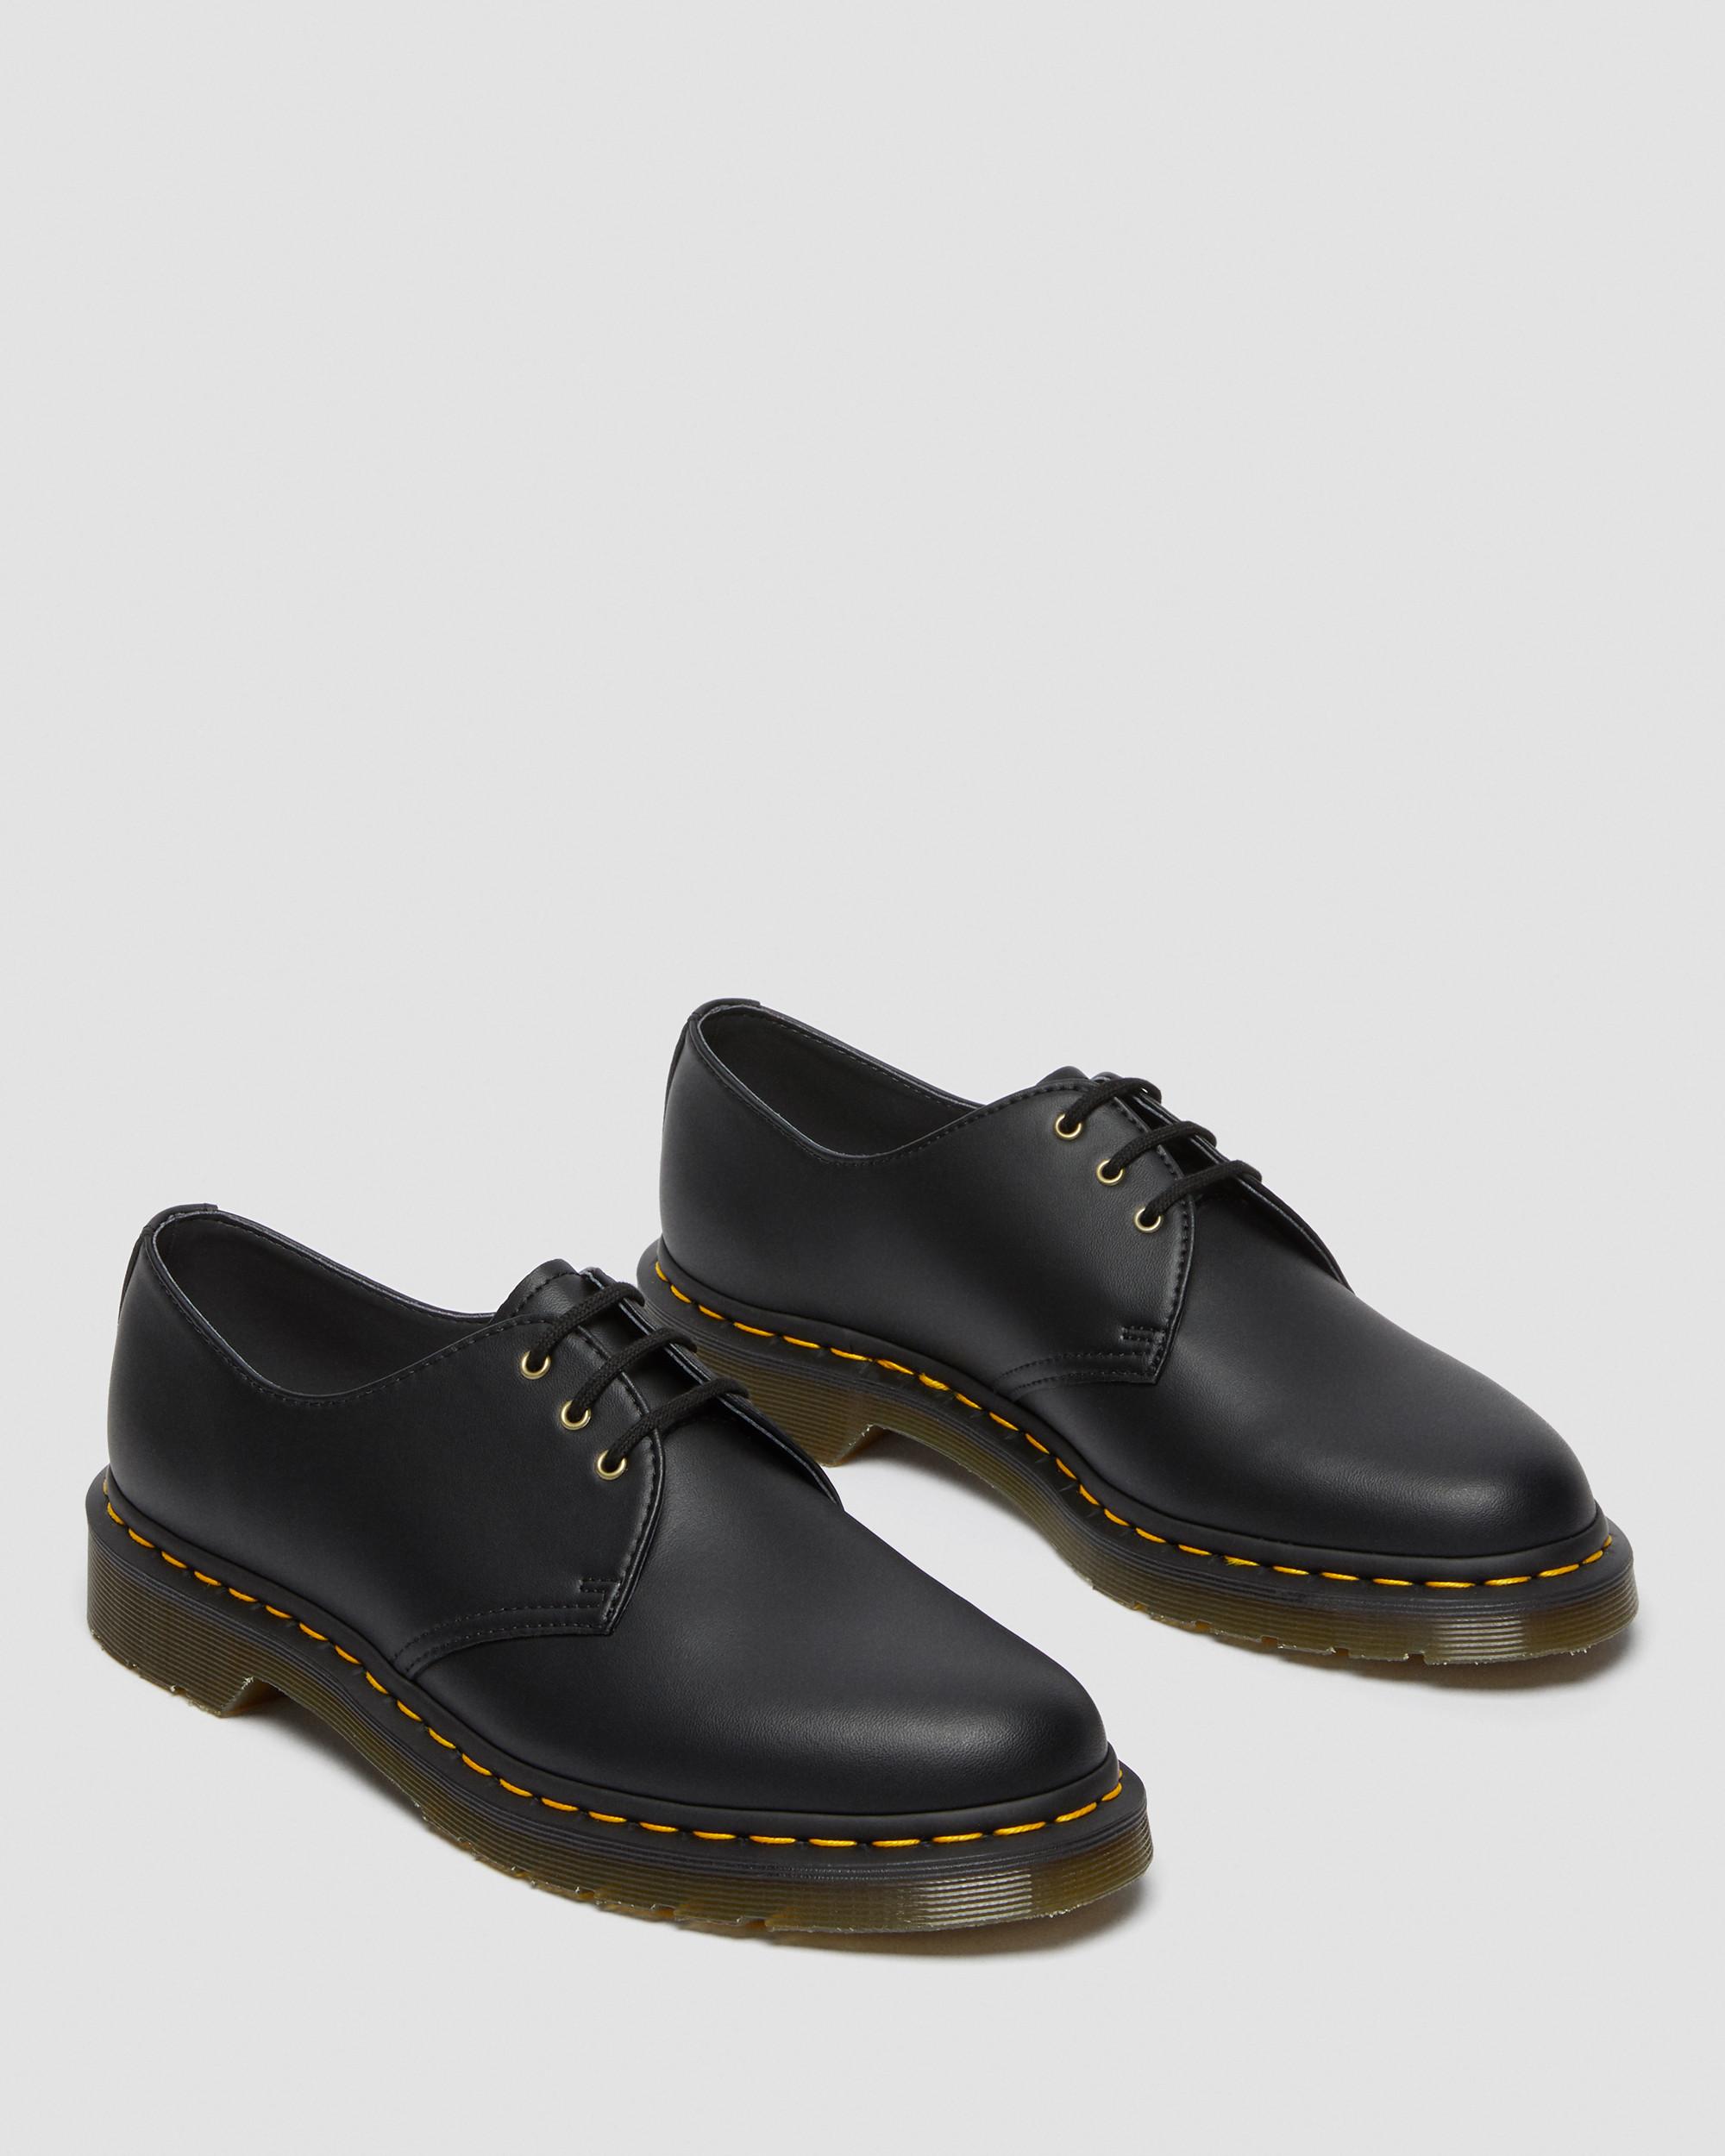 Vegan 1461 Felix Oxford Shoes in Black